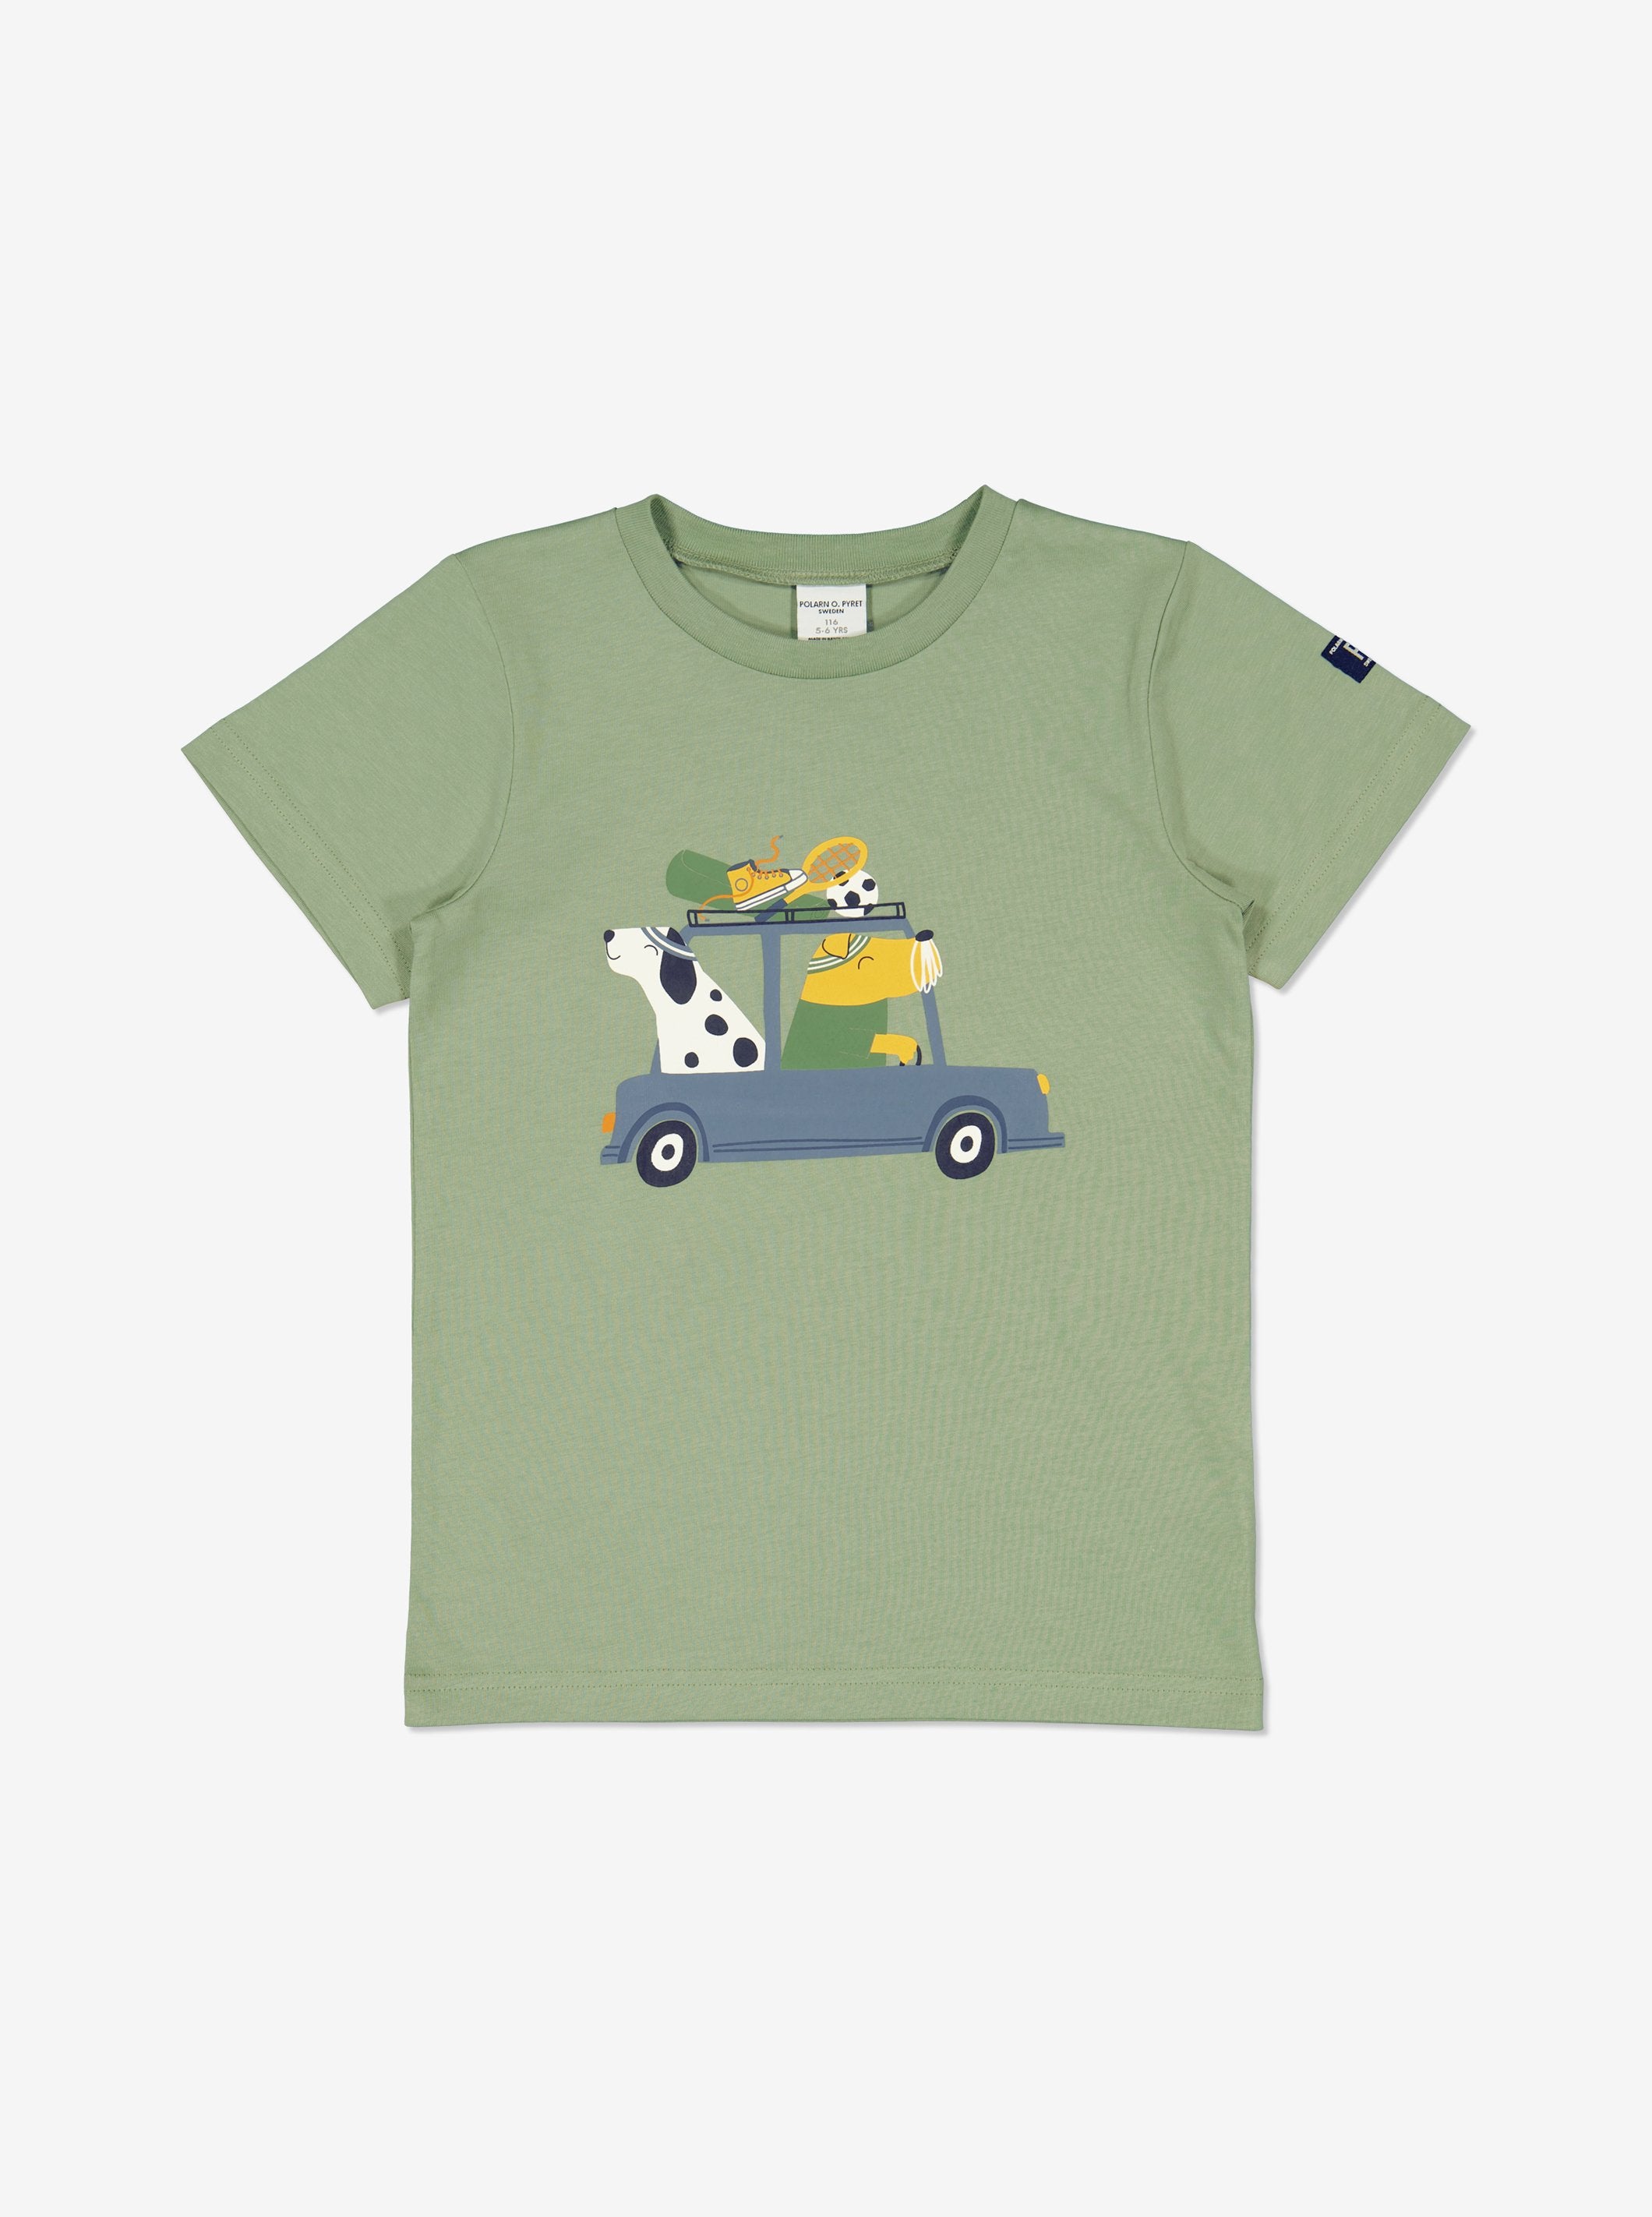 Polarn O. Pyret Organic Kids T-Shirt Green Boys Toddler Age 2-3 Years